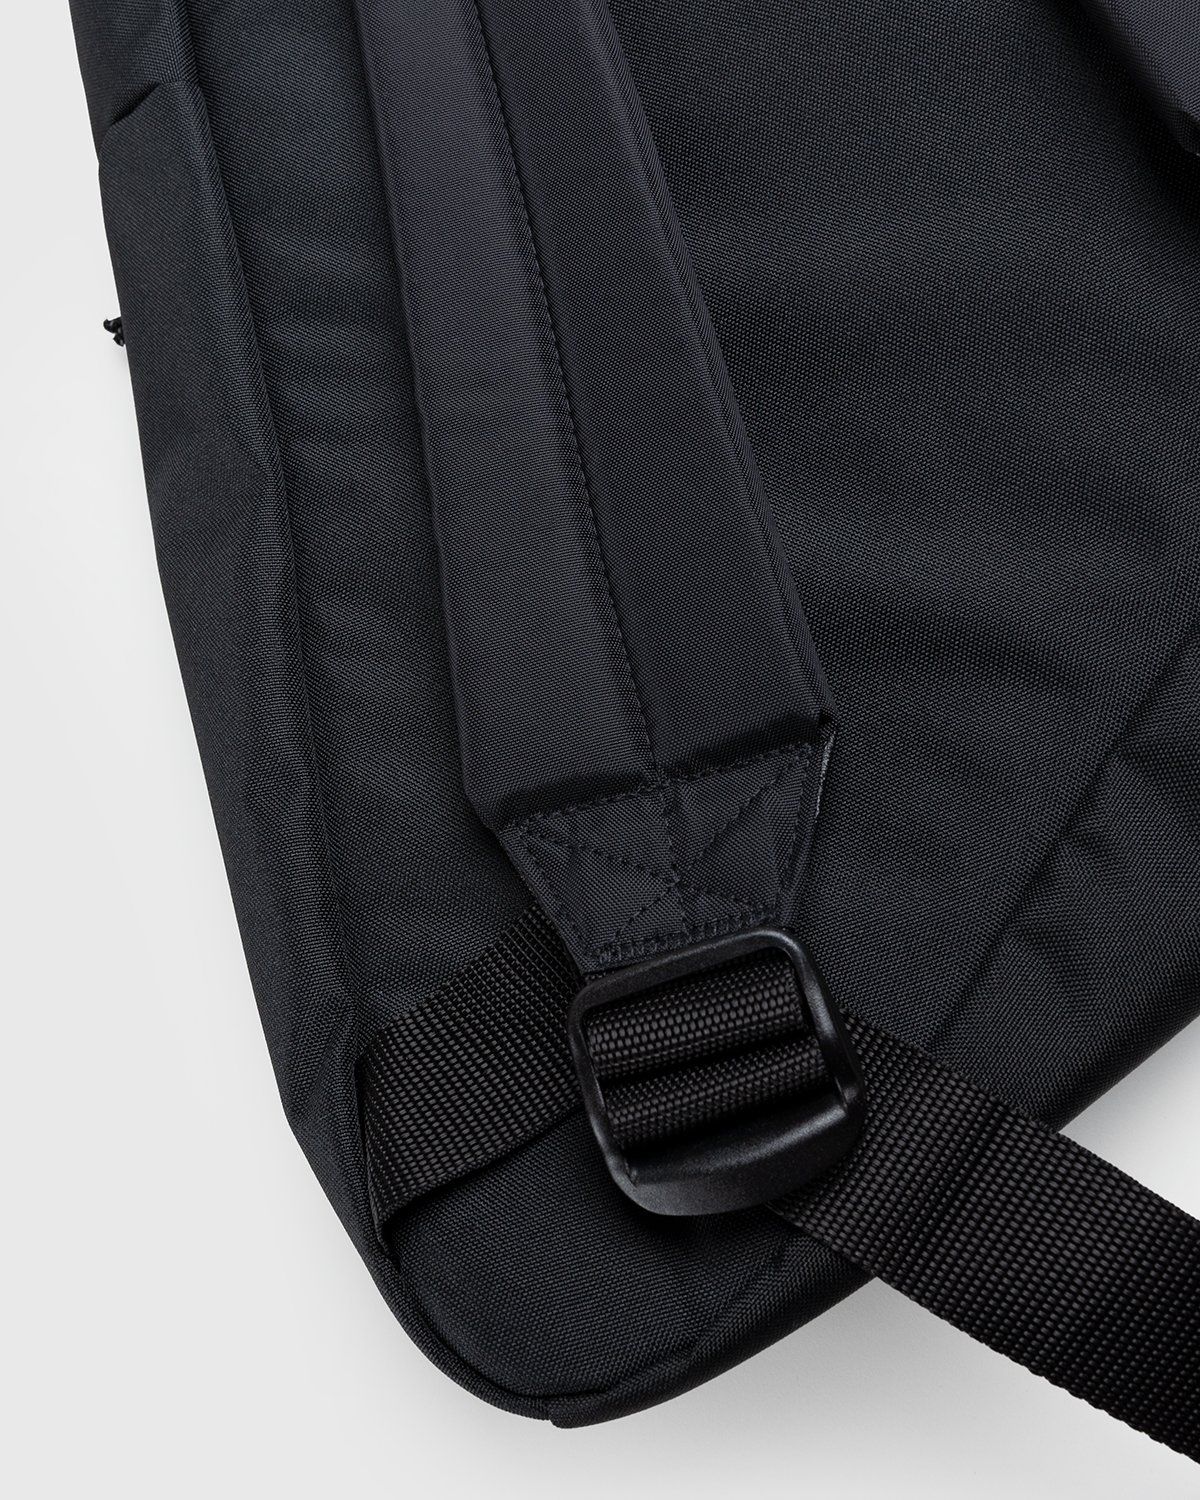 MM6 Maison Margiela x Eastpak – Zaino Backpack Black - Bags - Black - Image 6